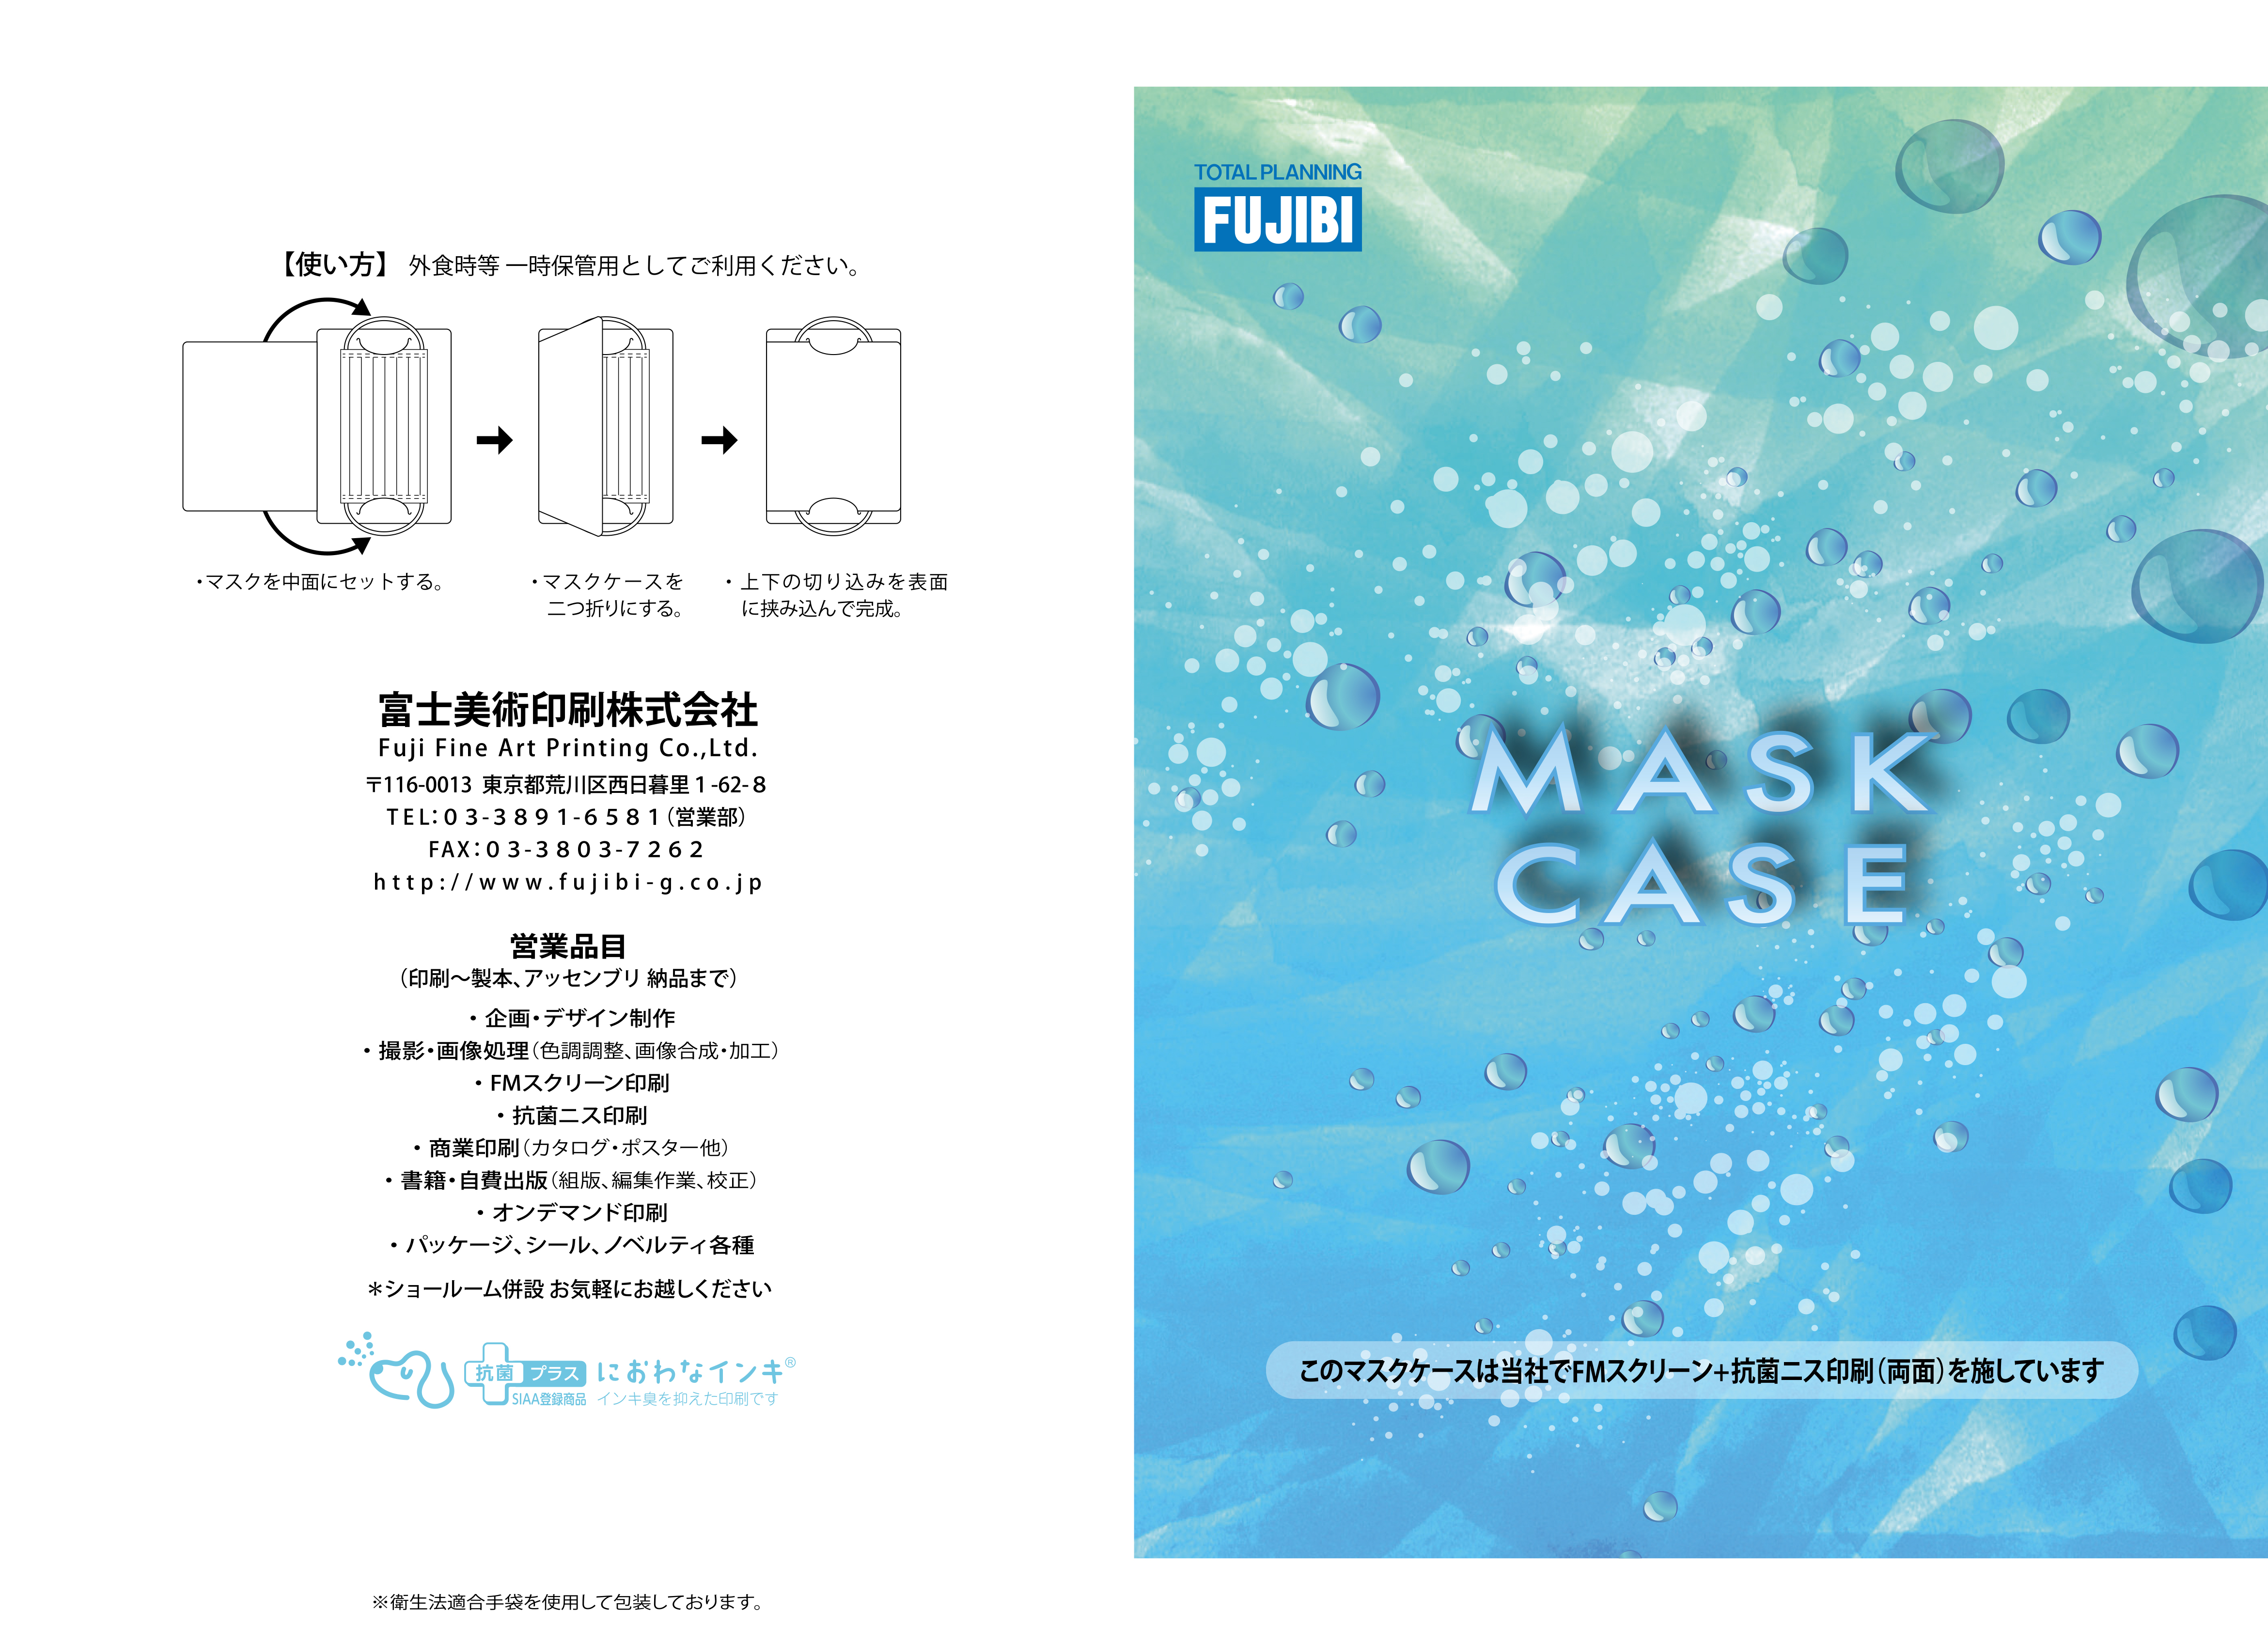 Mask case1